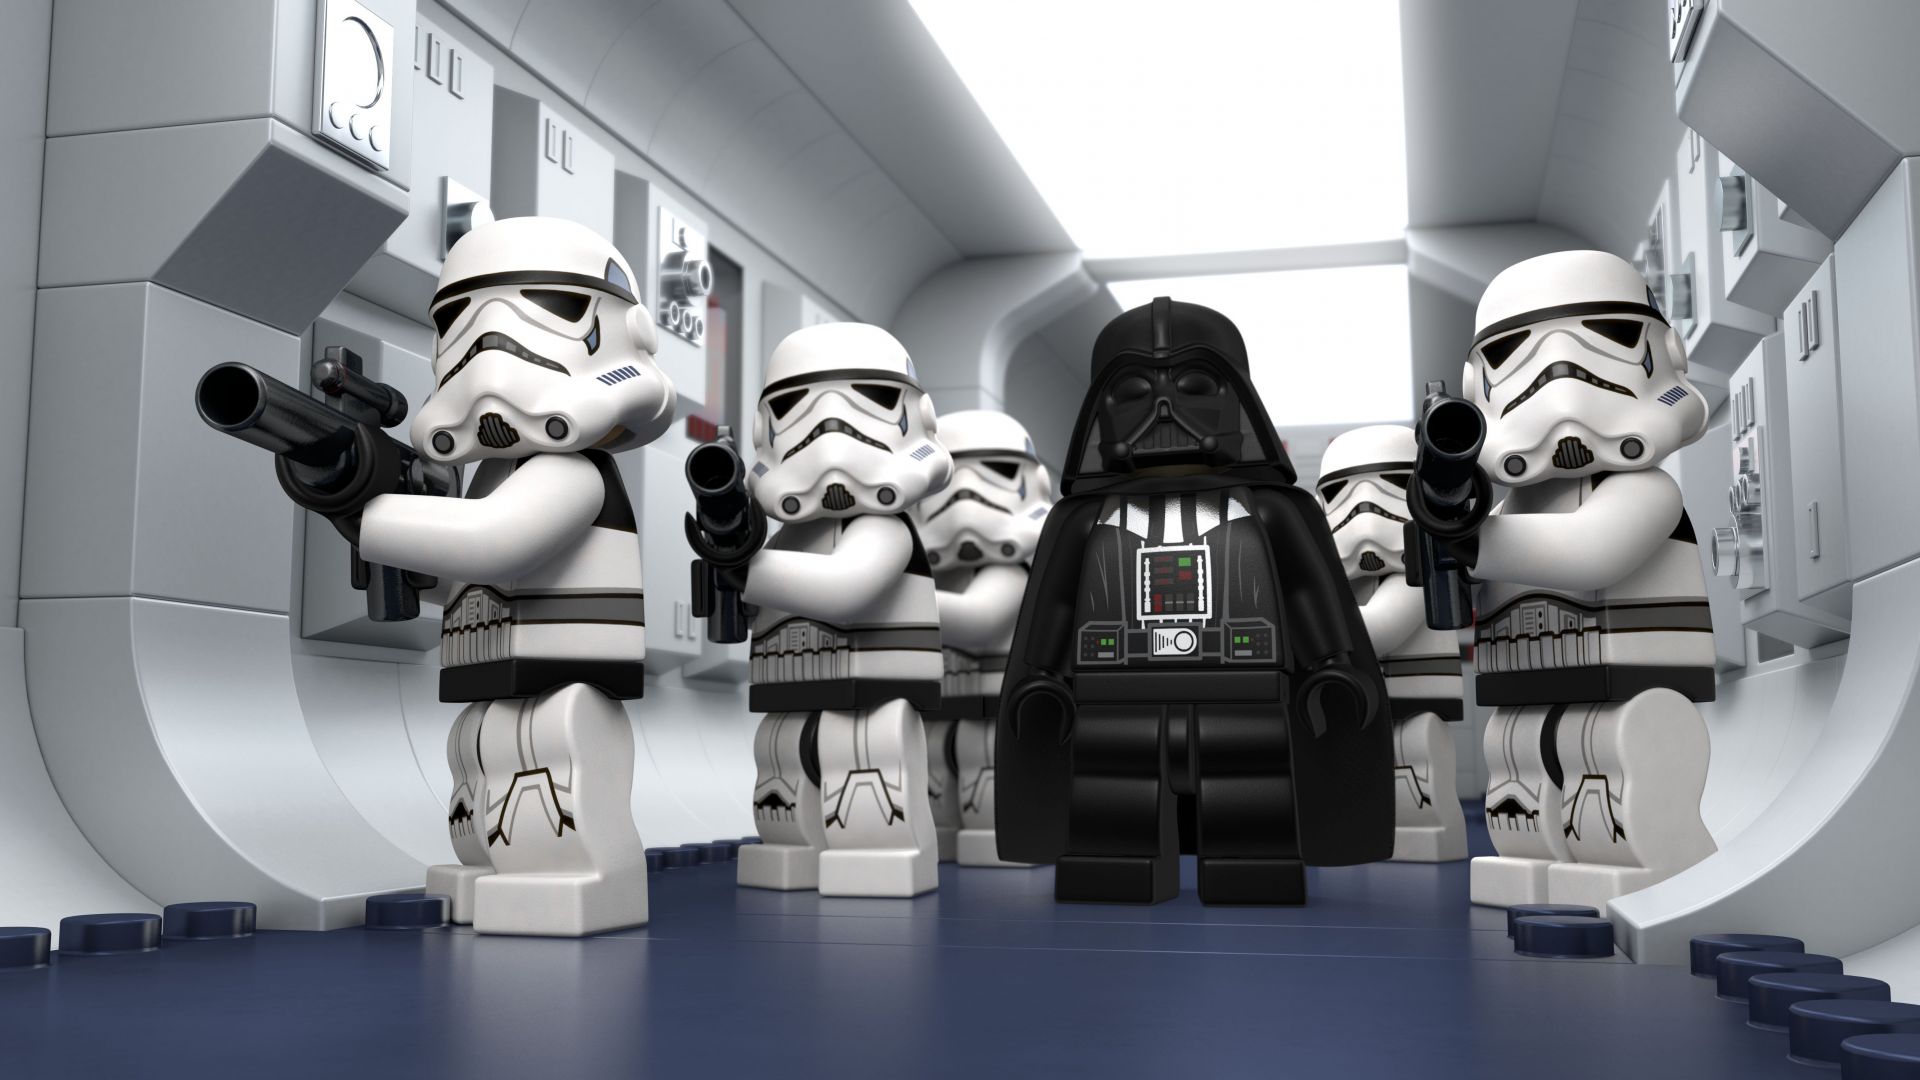 Wallpaper Lego Star Wars: Droid Tales, TV show, Darth Vader, stormtrooper